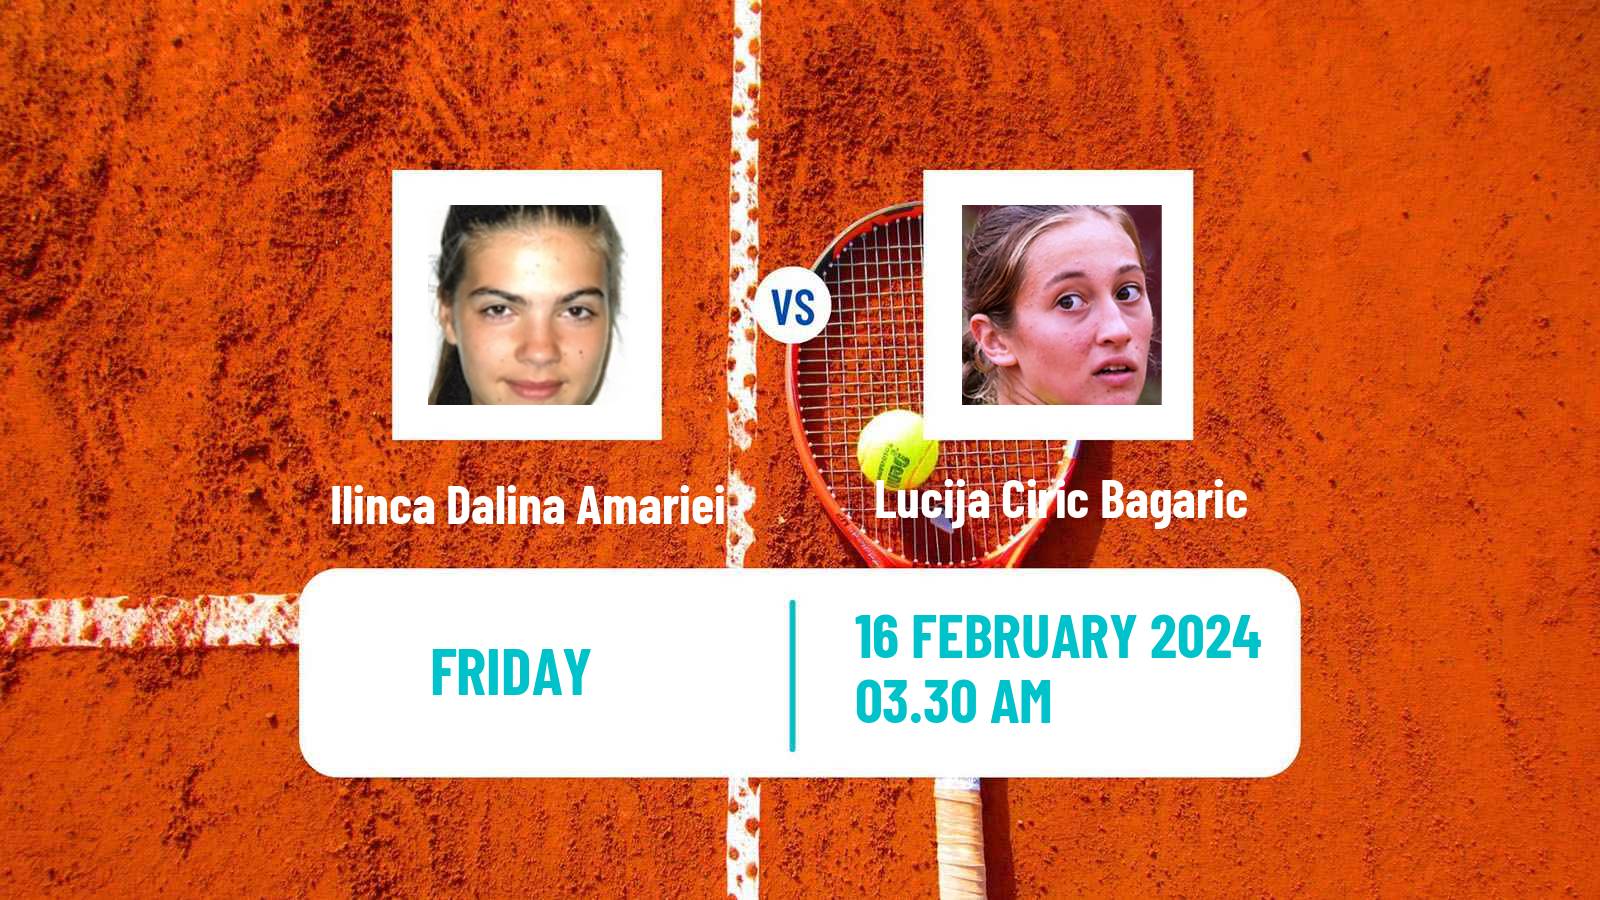 Tennis ITF W35 Hammamet Women Ilinca Dalina Amariei - Lucija Ciric Bagaric